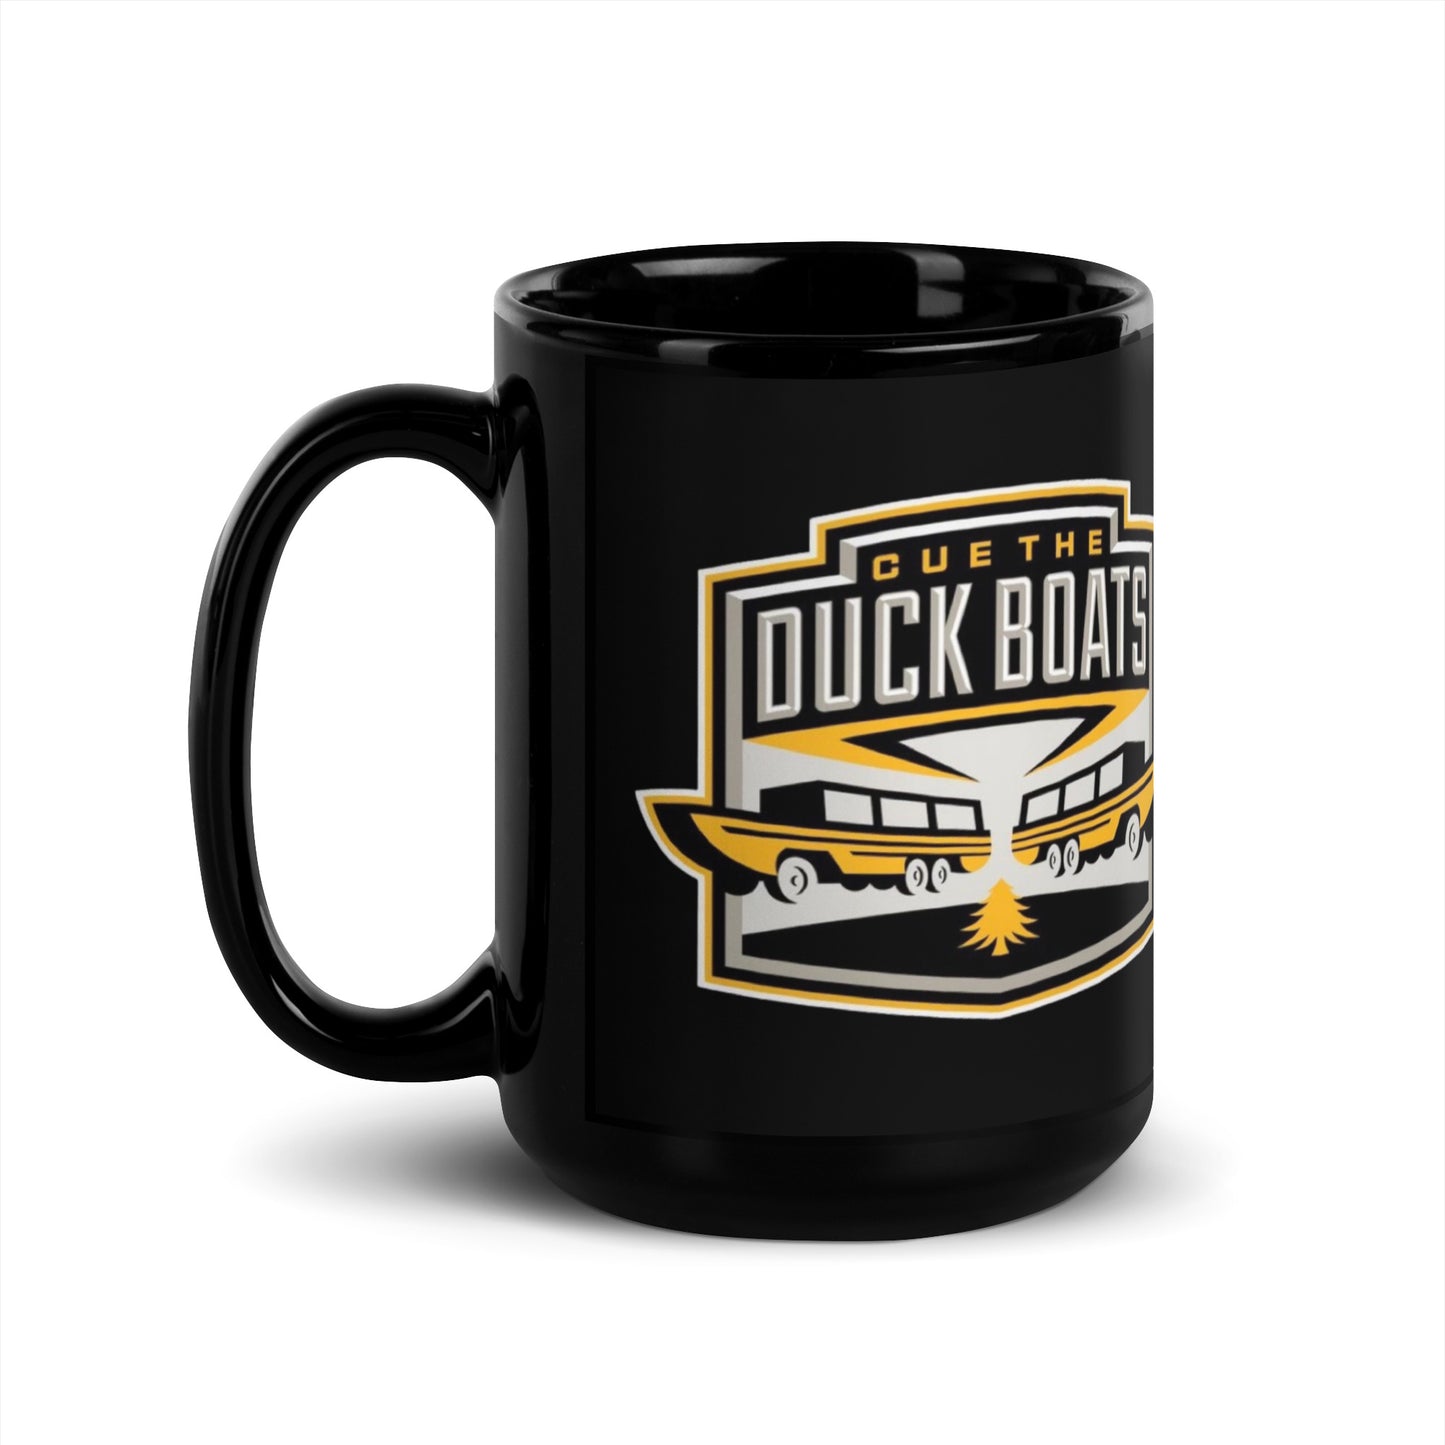 Cue The Duck Boats Mug